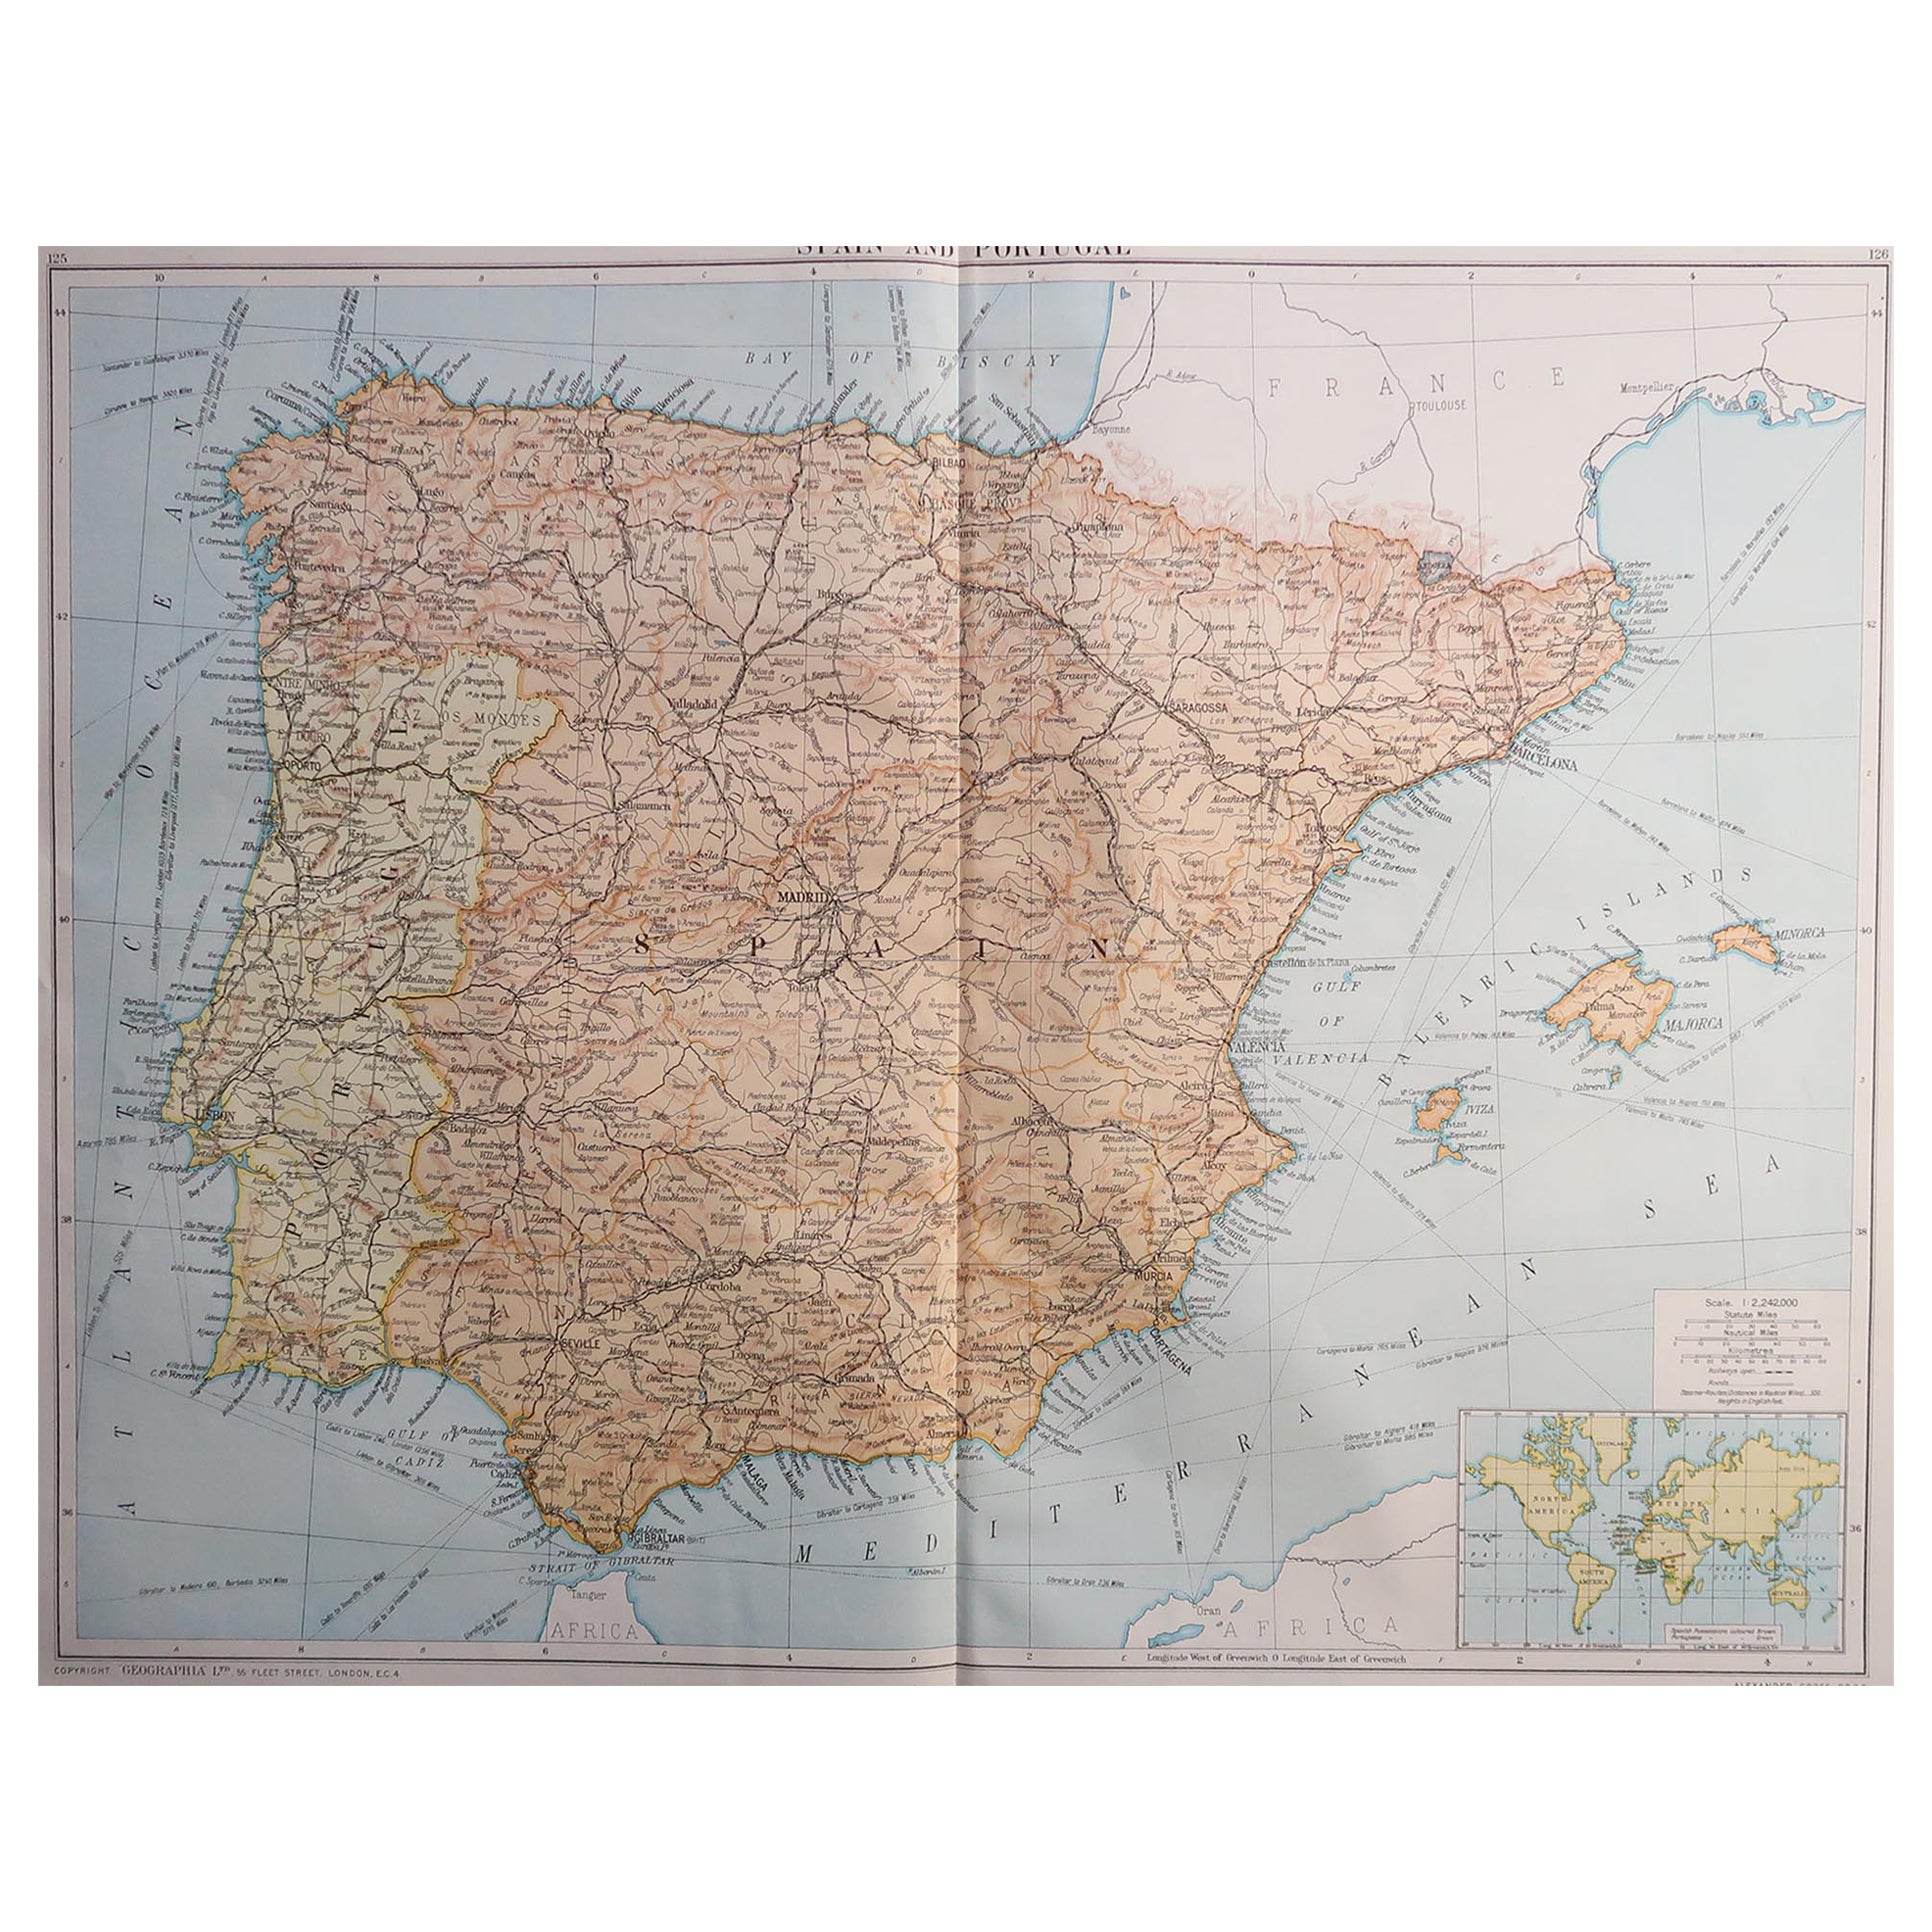 Grande carte originale d'Espagne d'poque, vers 1920